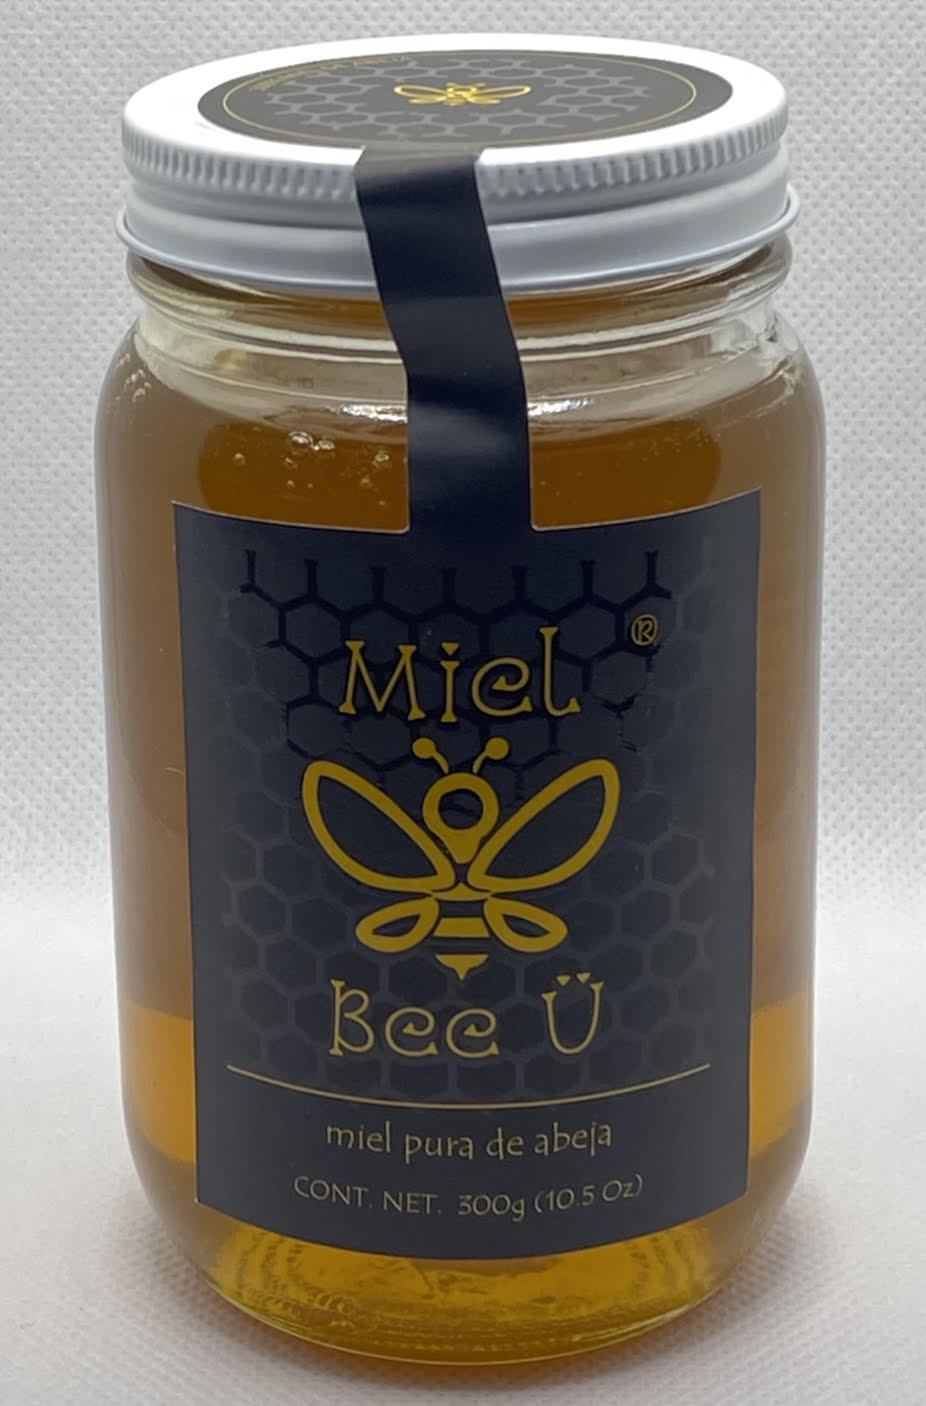 Miel 100% pura de abeja multiflora Bee Ü